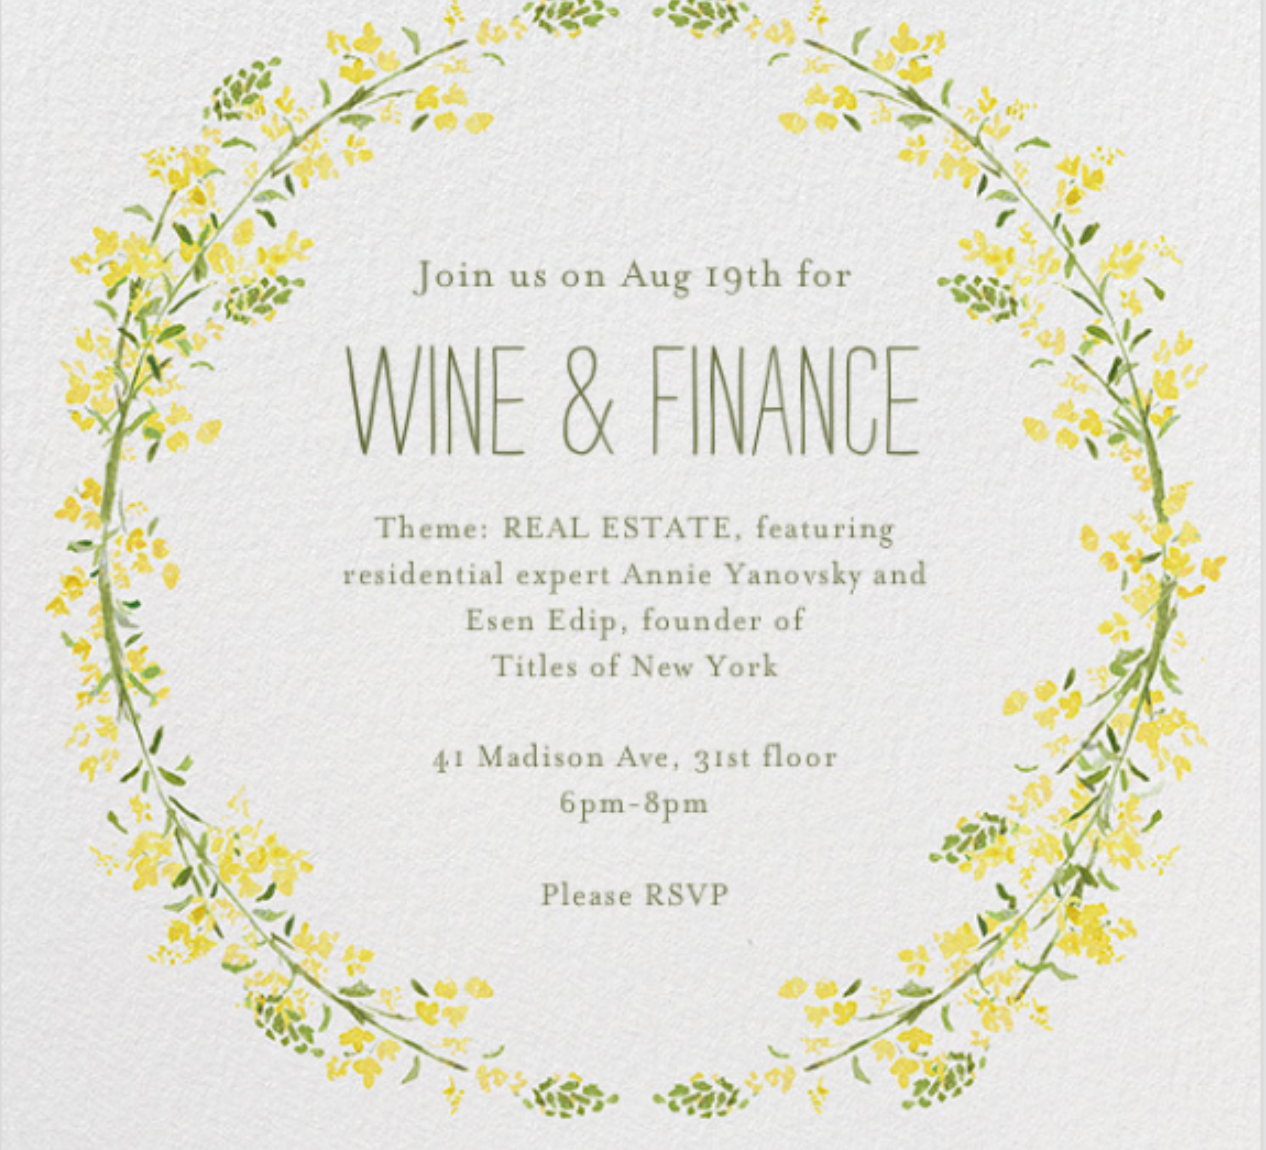 Summer 2014 Wine & Finance: Real Estate